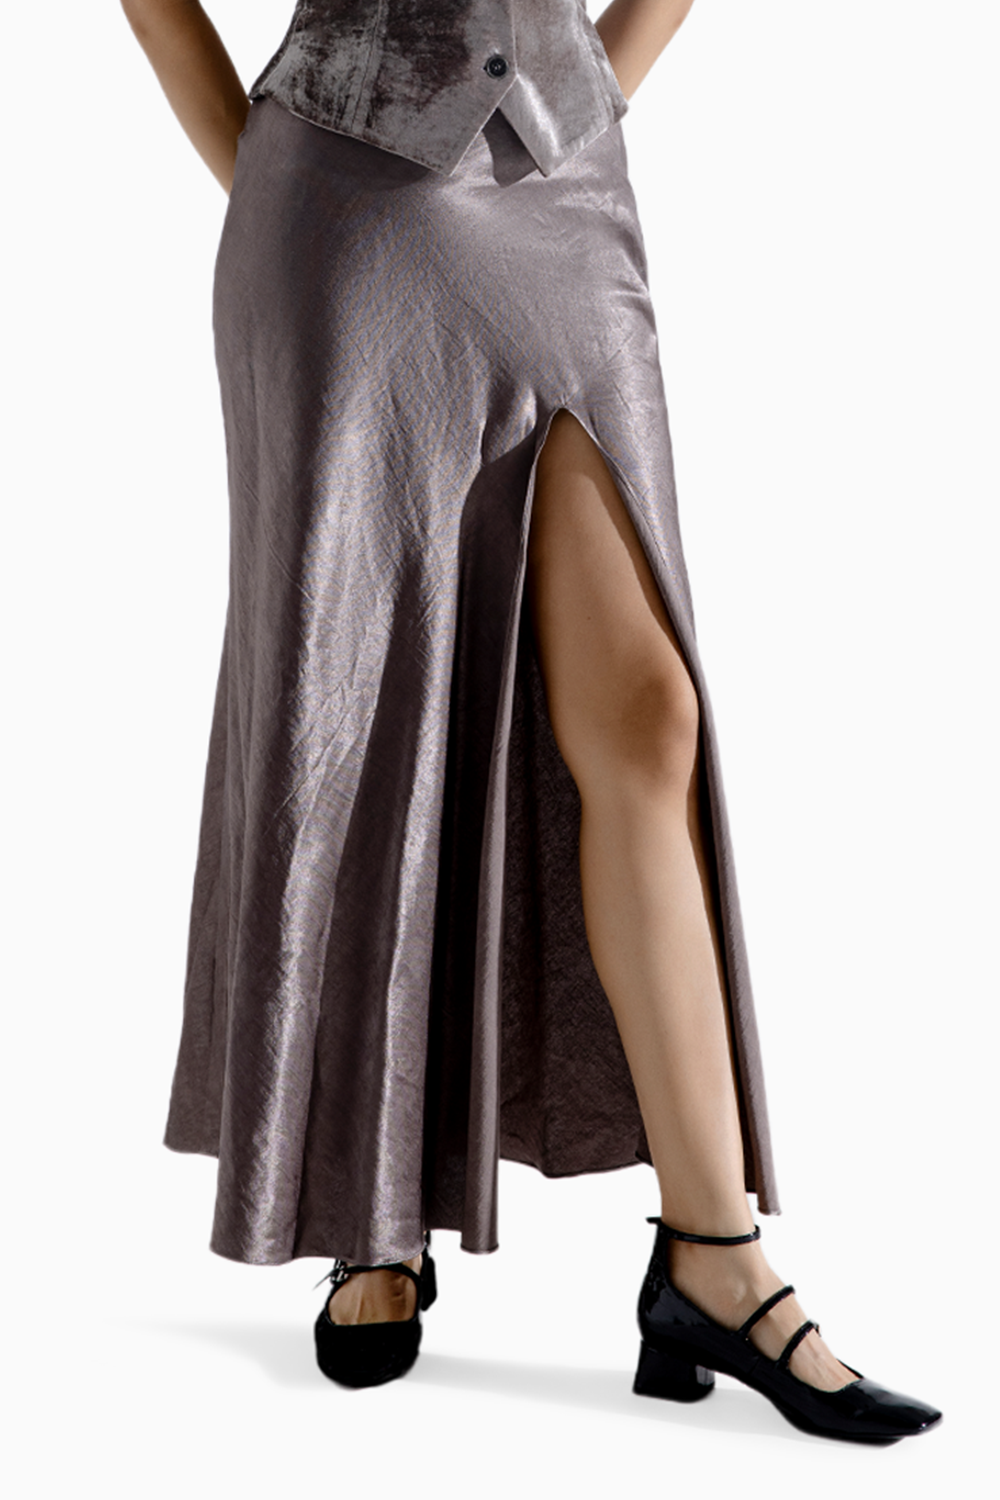 Sleek Steel Skirt